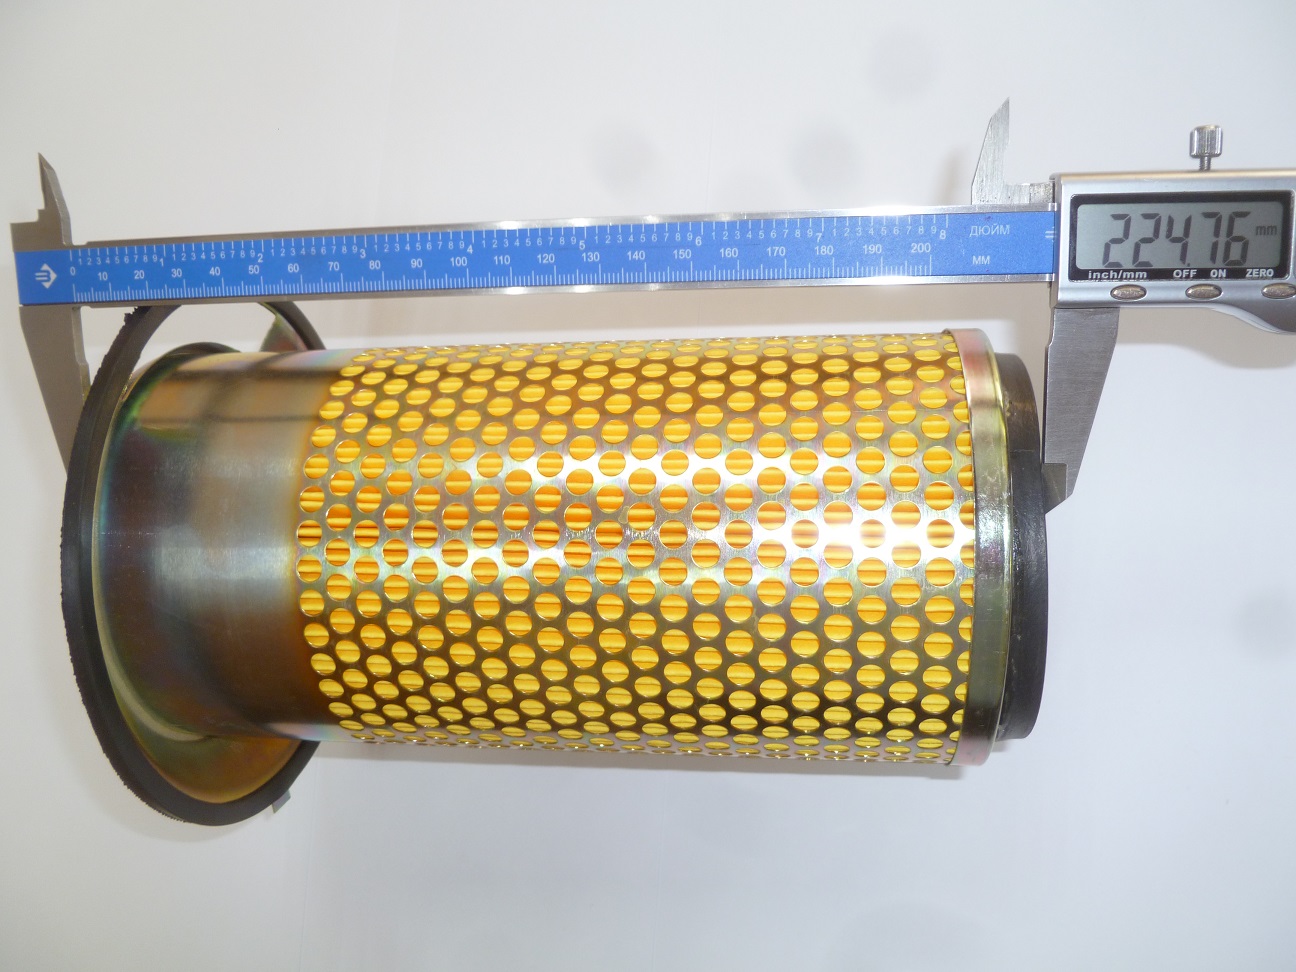 Фильтроэлемент воздушный цилиндрический (Д=109х62х217 мм) SDG 10 000 (кожух)